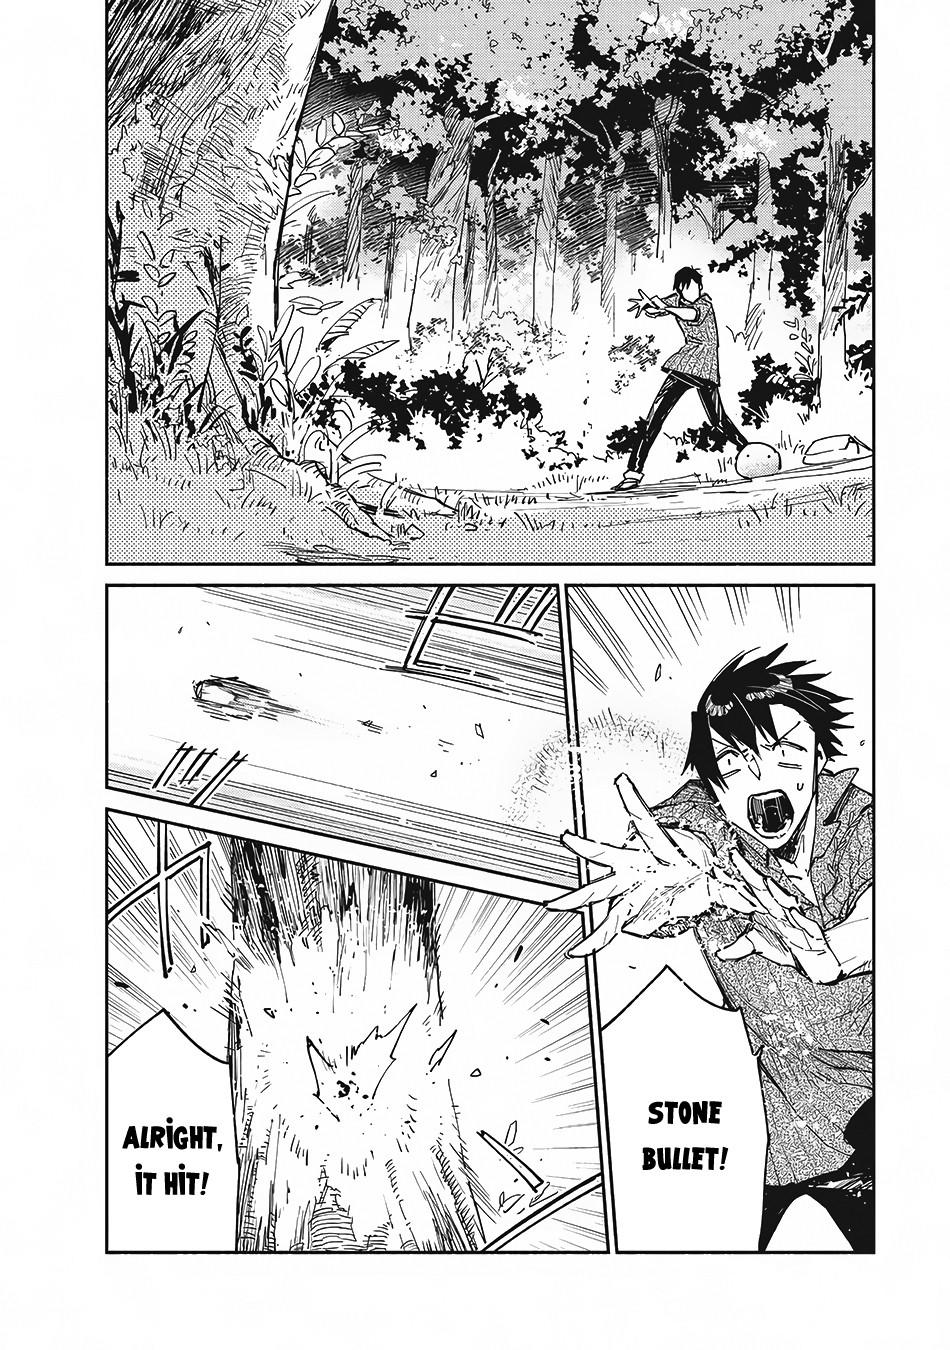 Read Manga Tondemo Skill de Isekai Hourou Meshi: Sui no Daibouken - Chapter  12